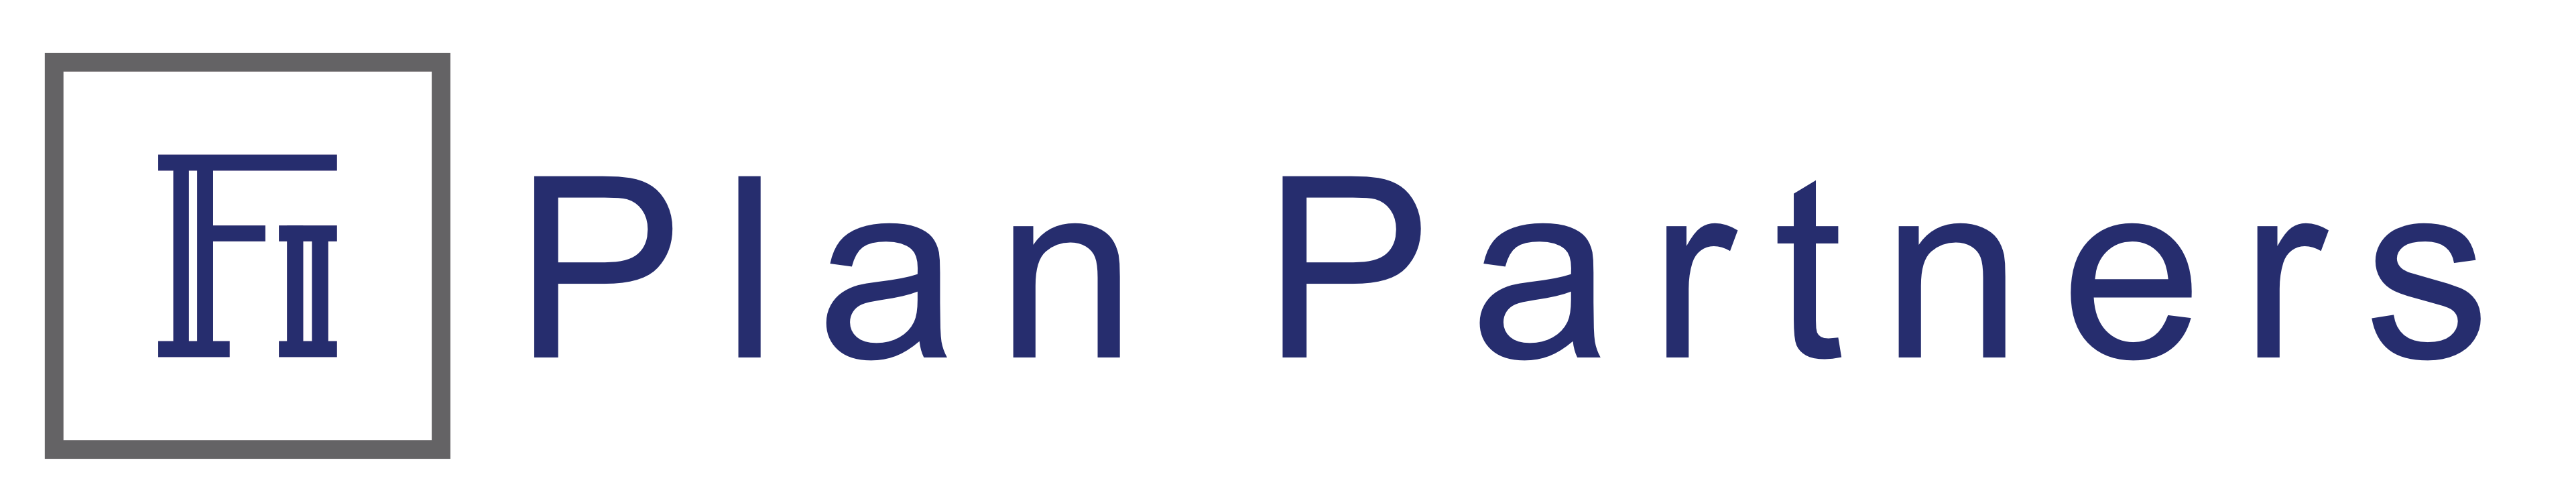 FI Plan Partners Logo